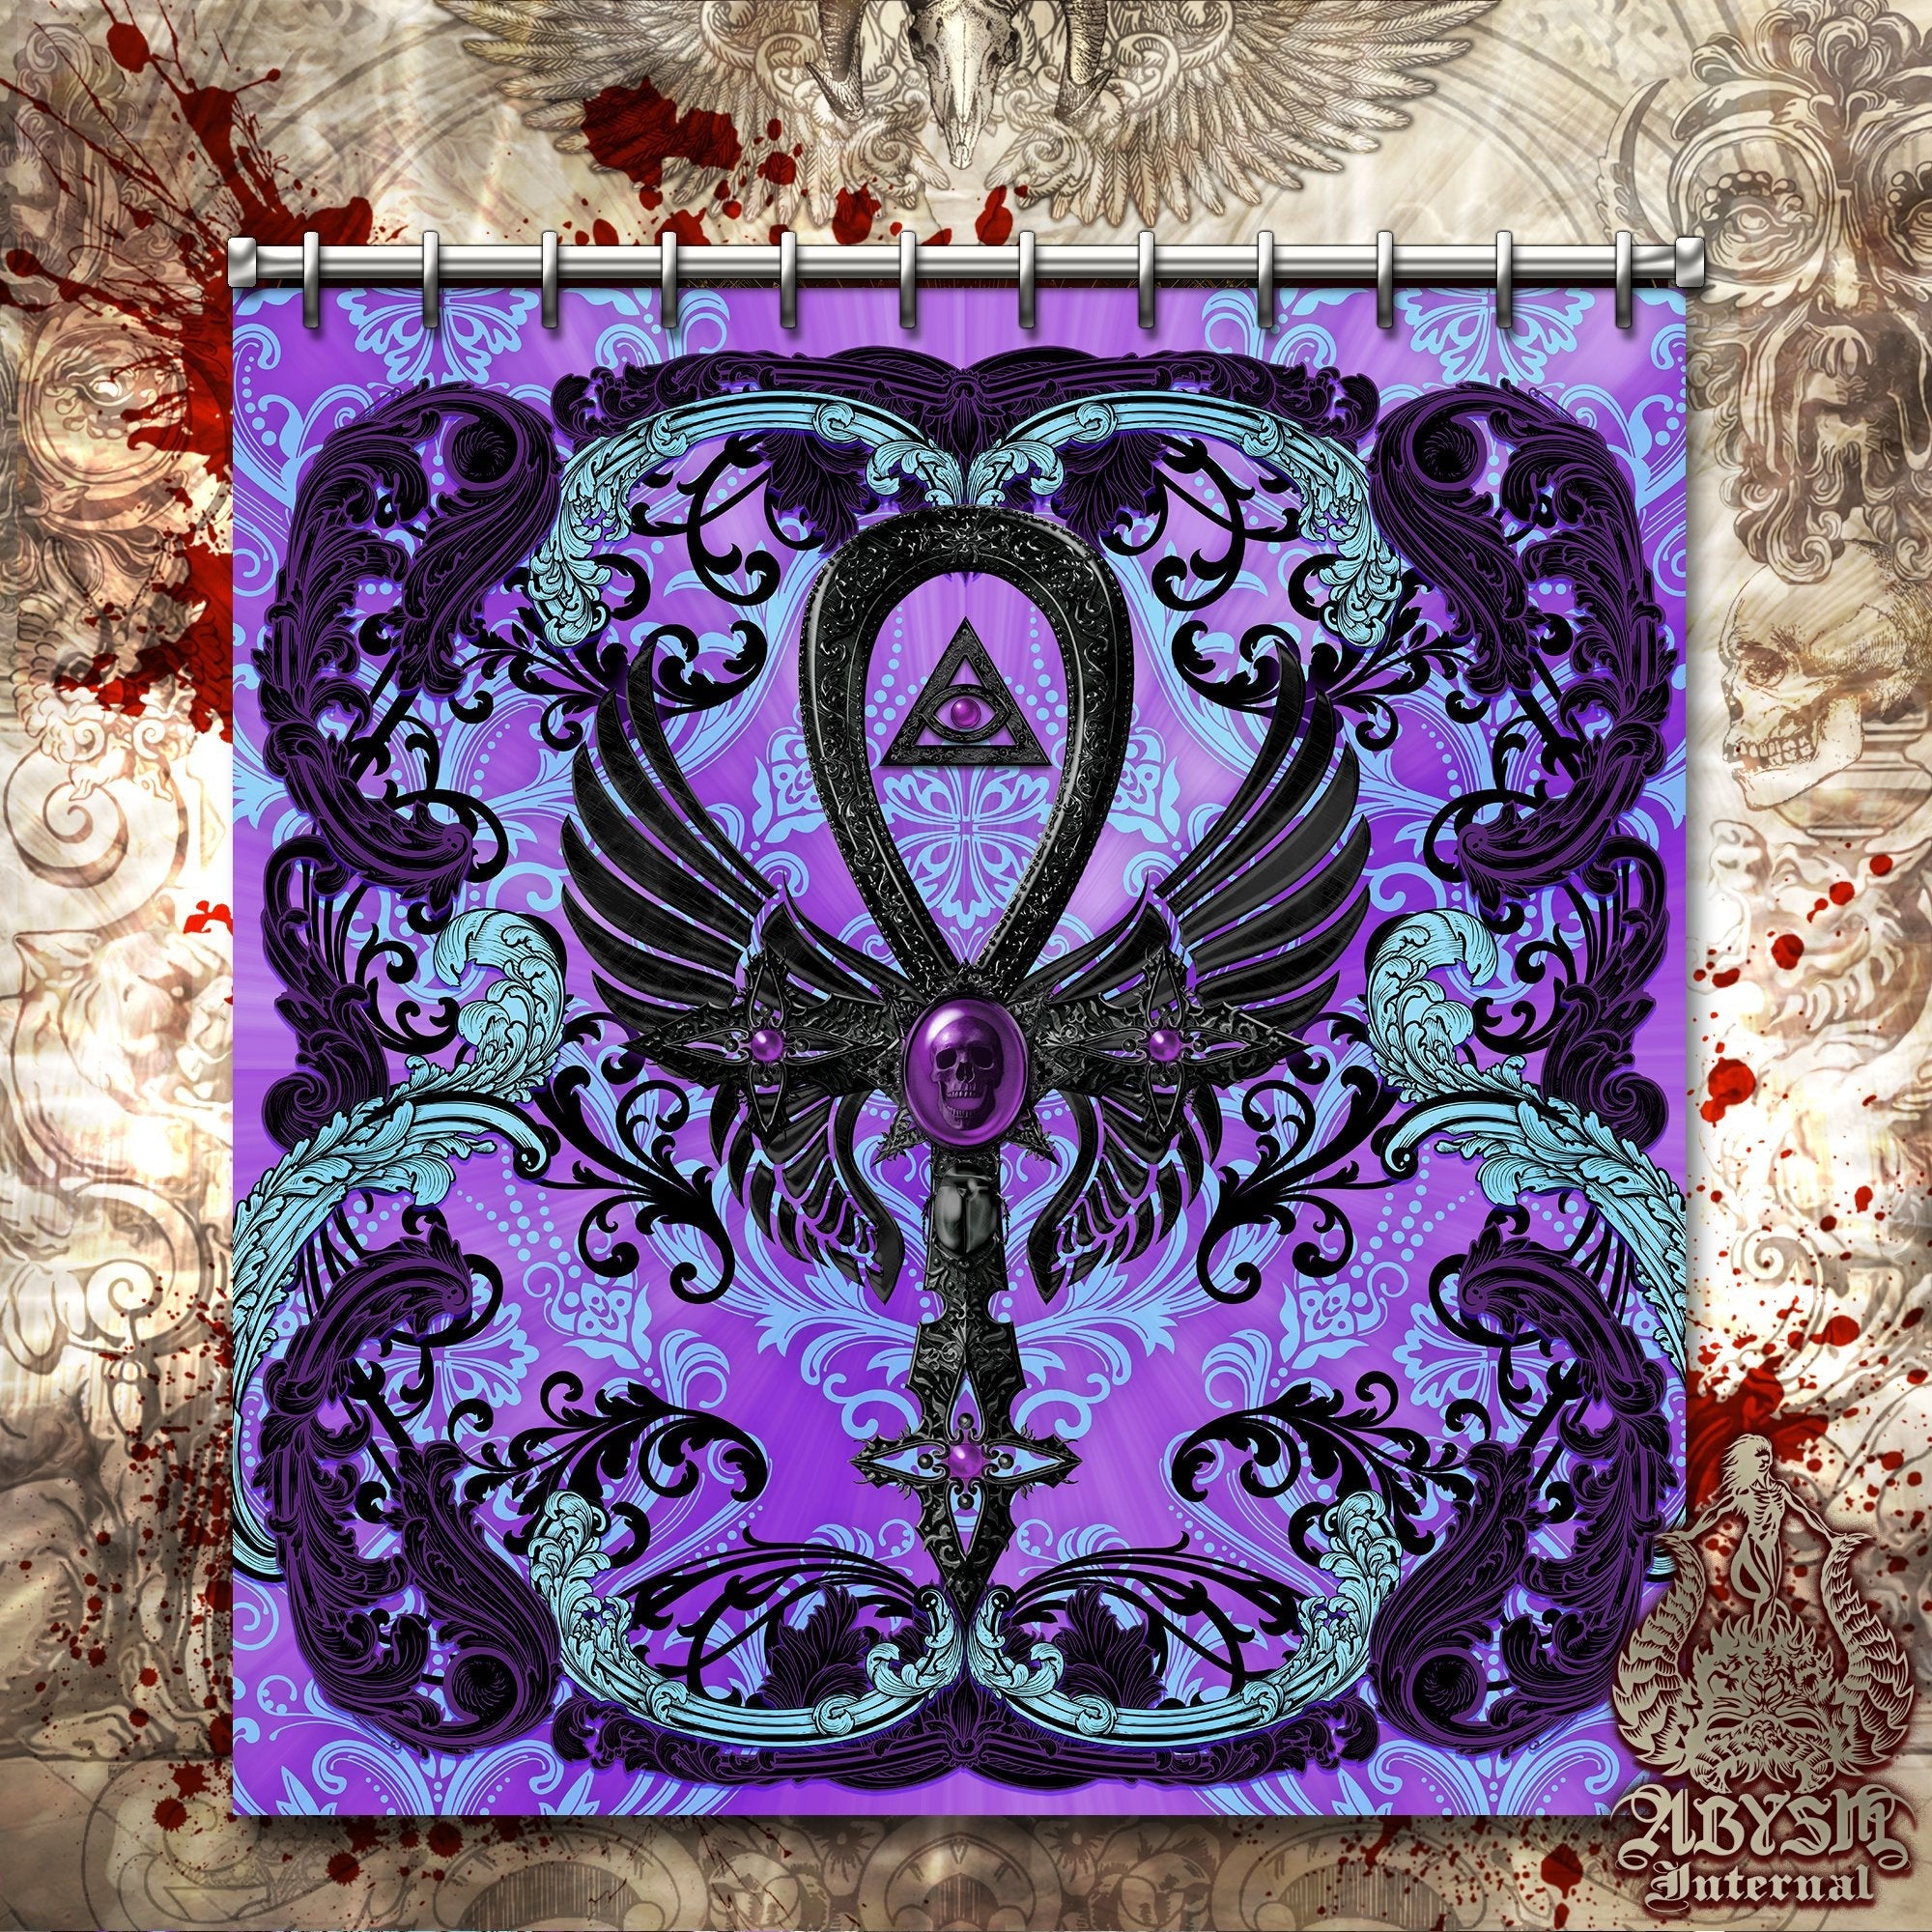 Pastel Goth Shower Curtain, Dark Ankh, Gothic Bathroom Decor, Occult - Black and Purple - Abysm Internal